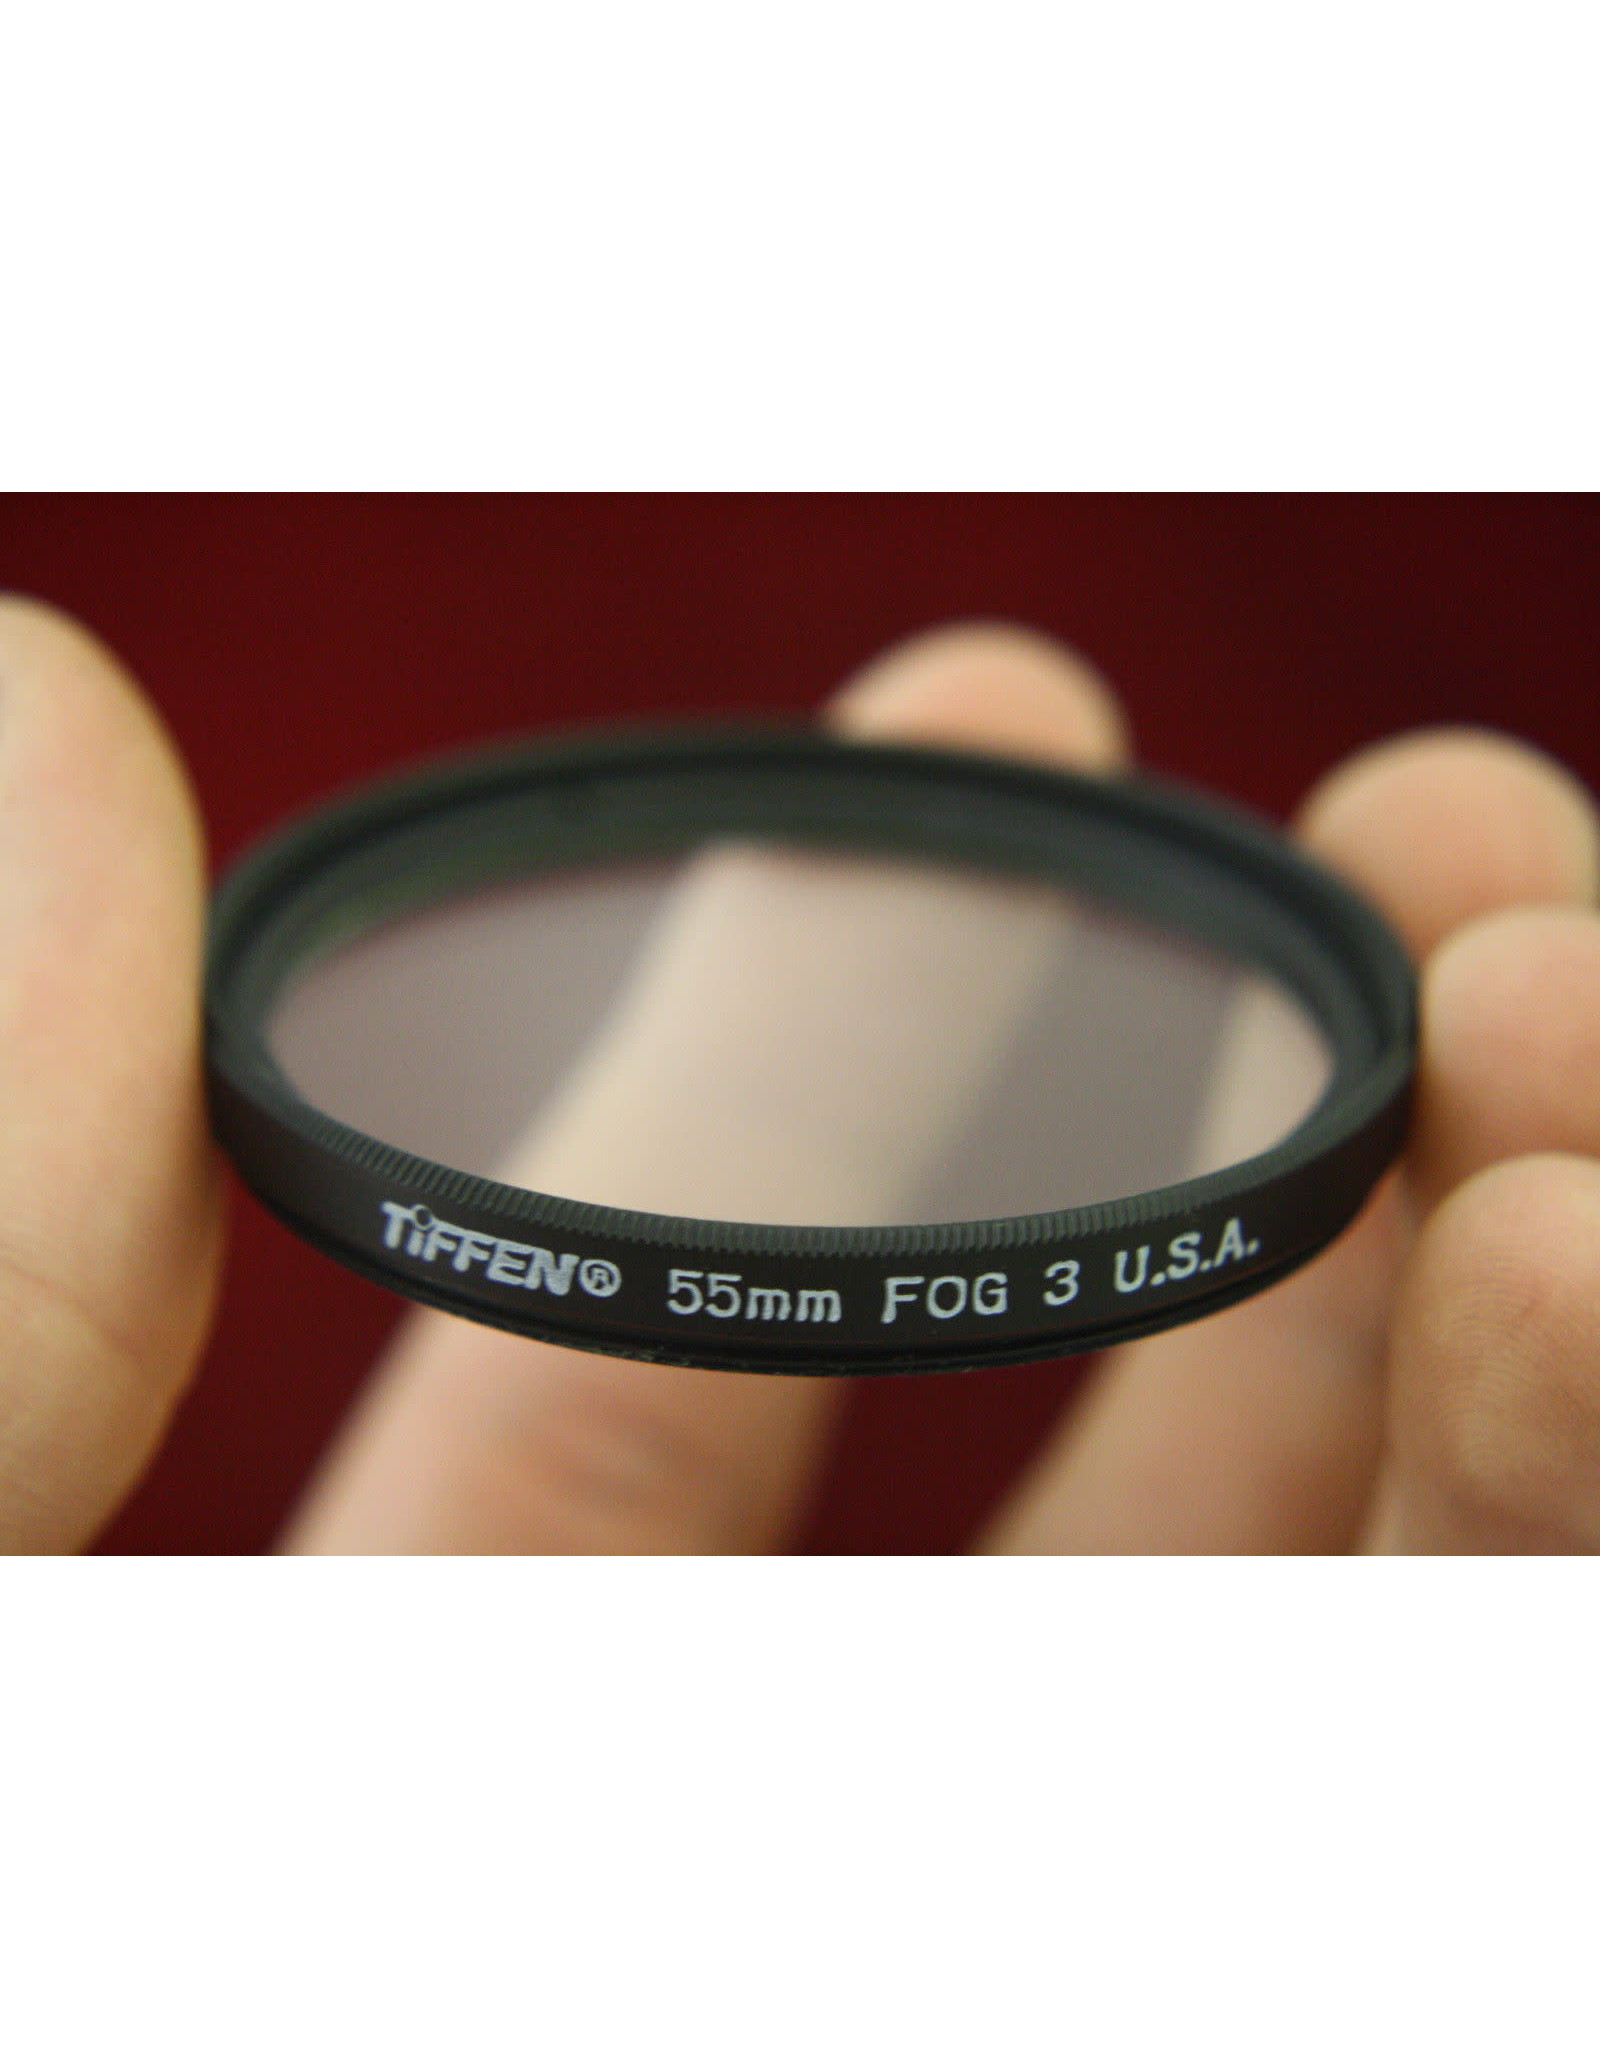 Tiffen 55mm Fog 3 Filter